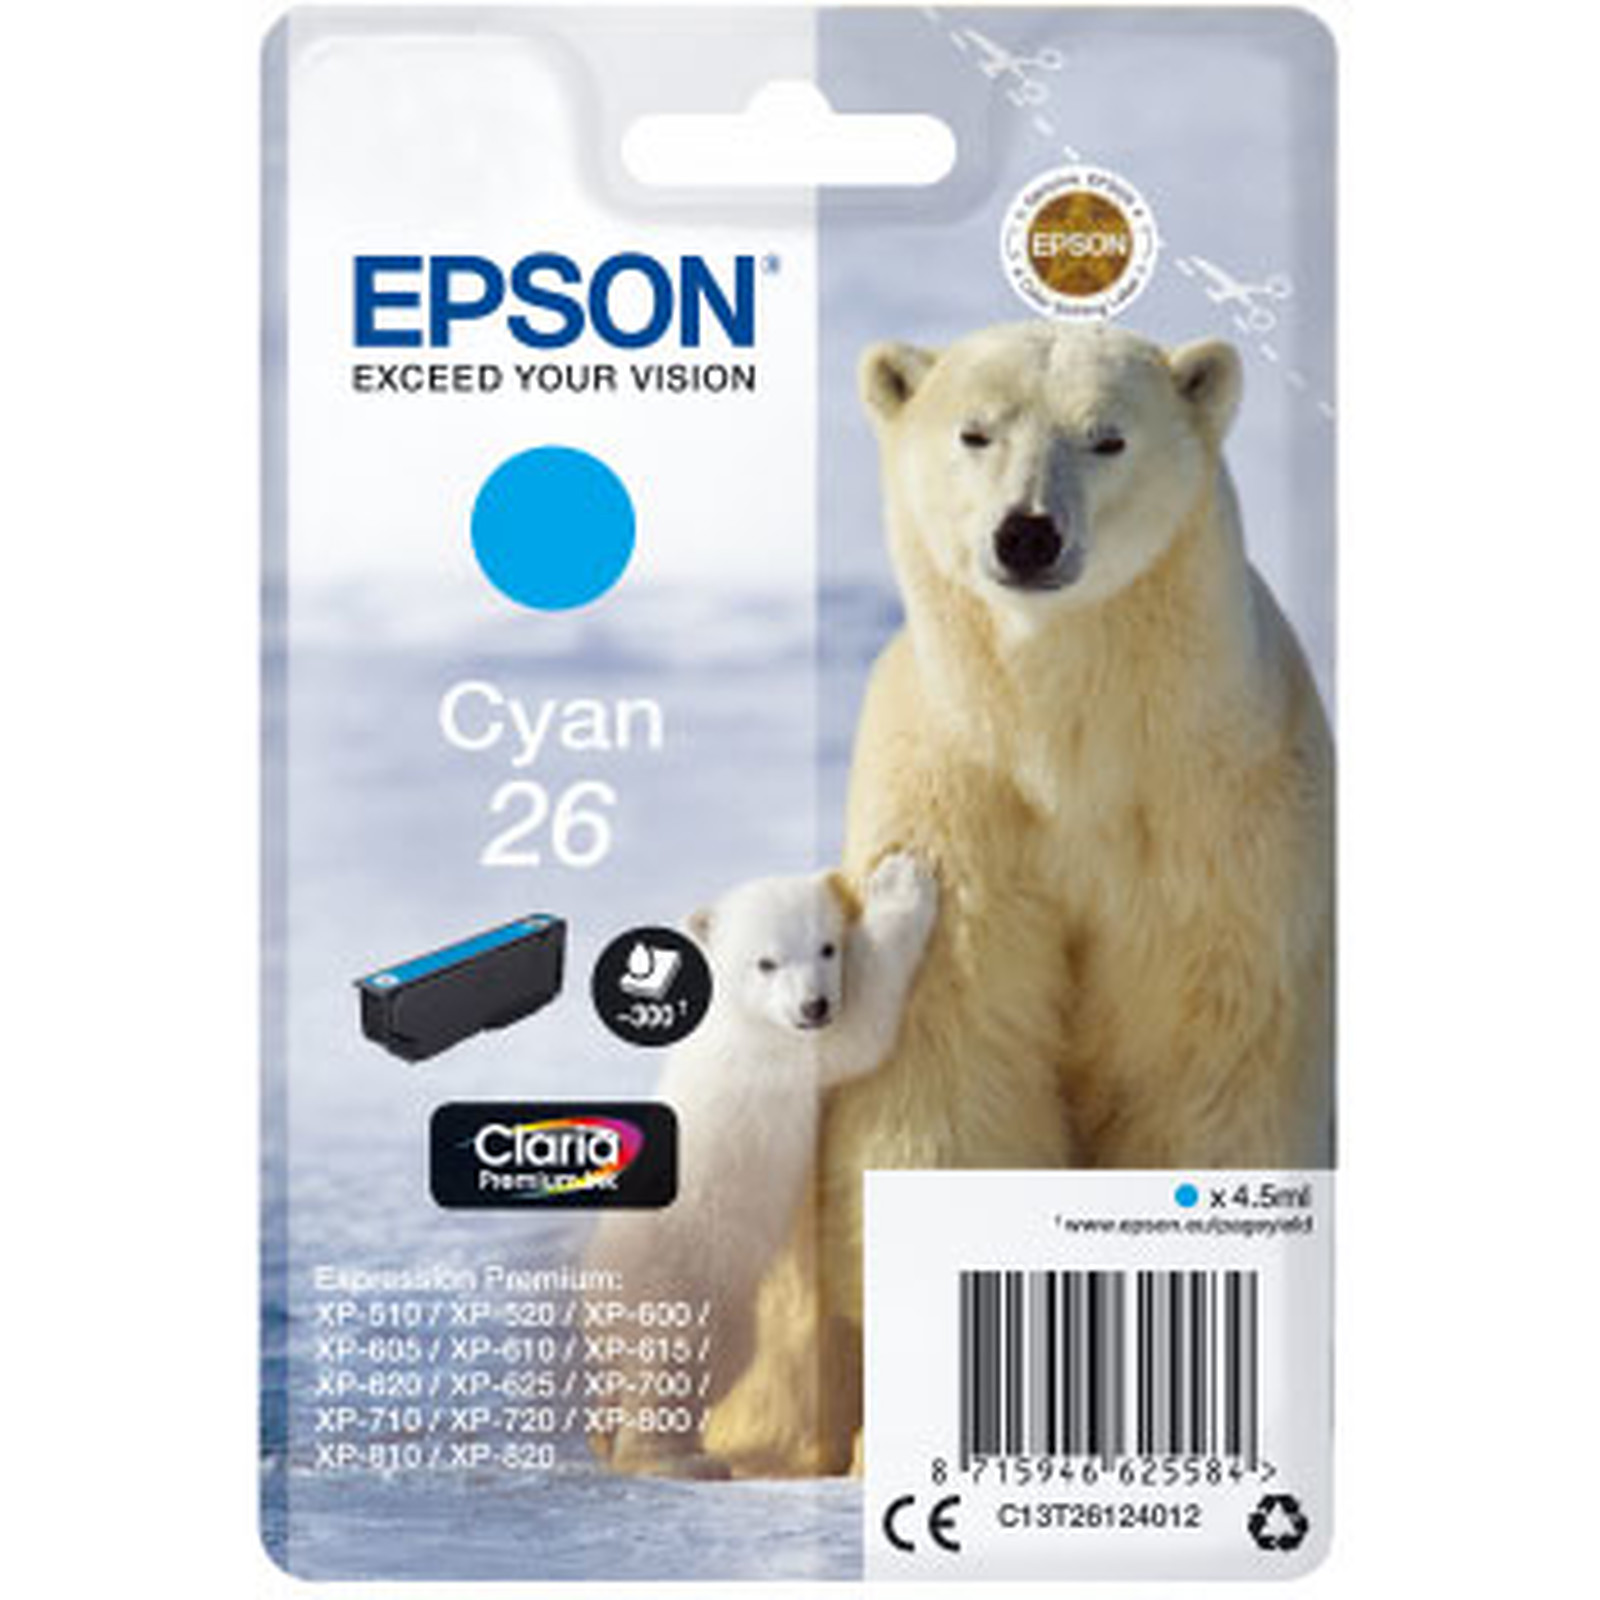 Epson Ours Polaire 26 Cyan - Cartouche imprimante Epson